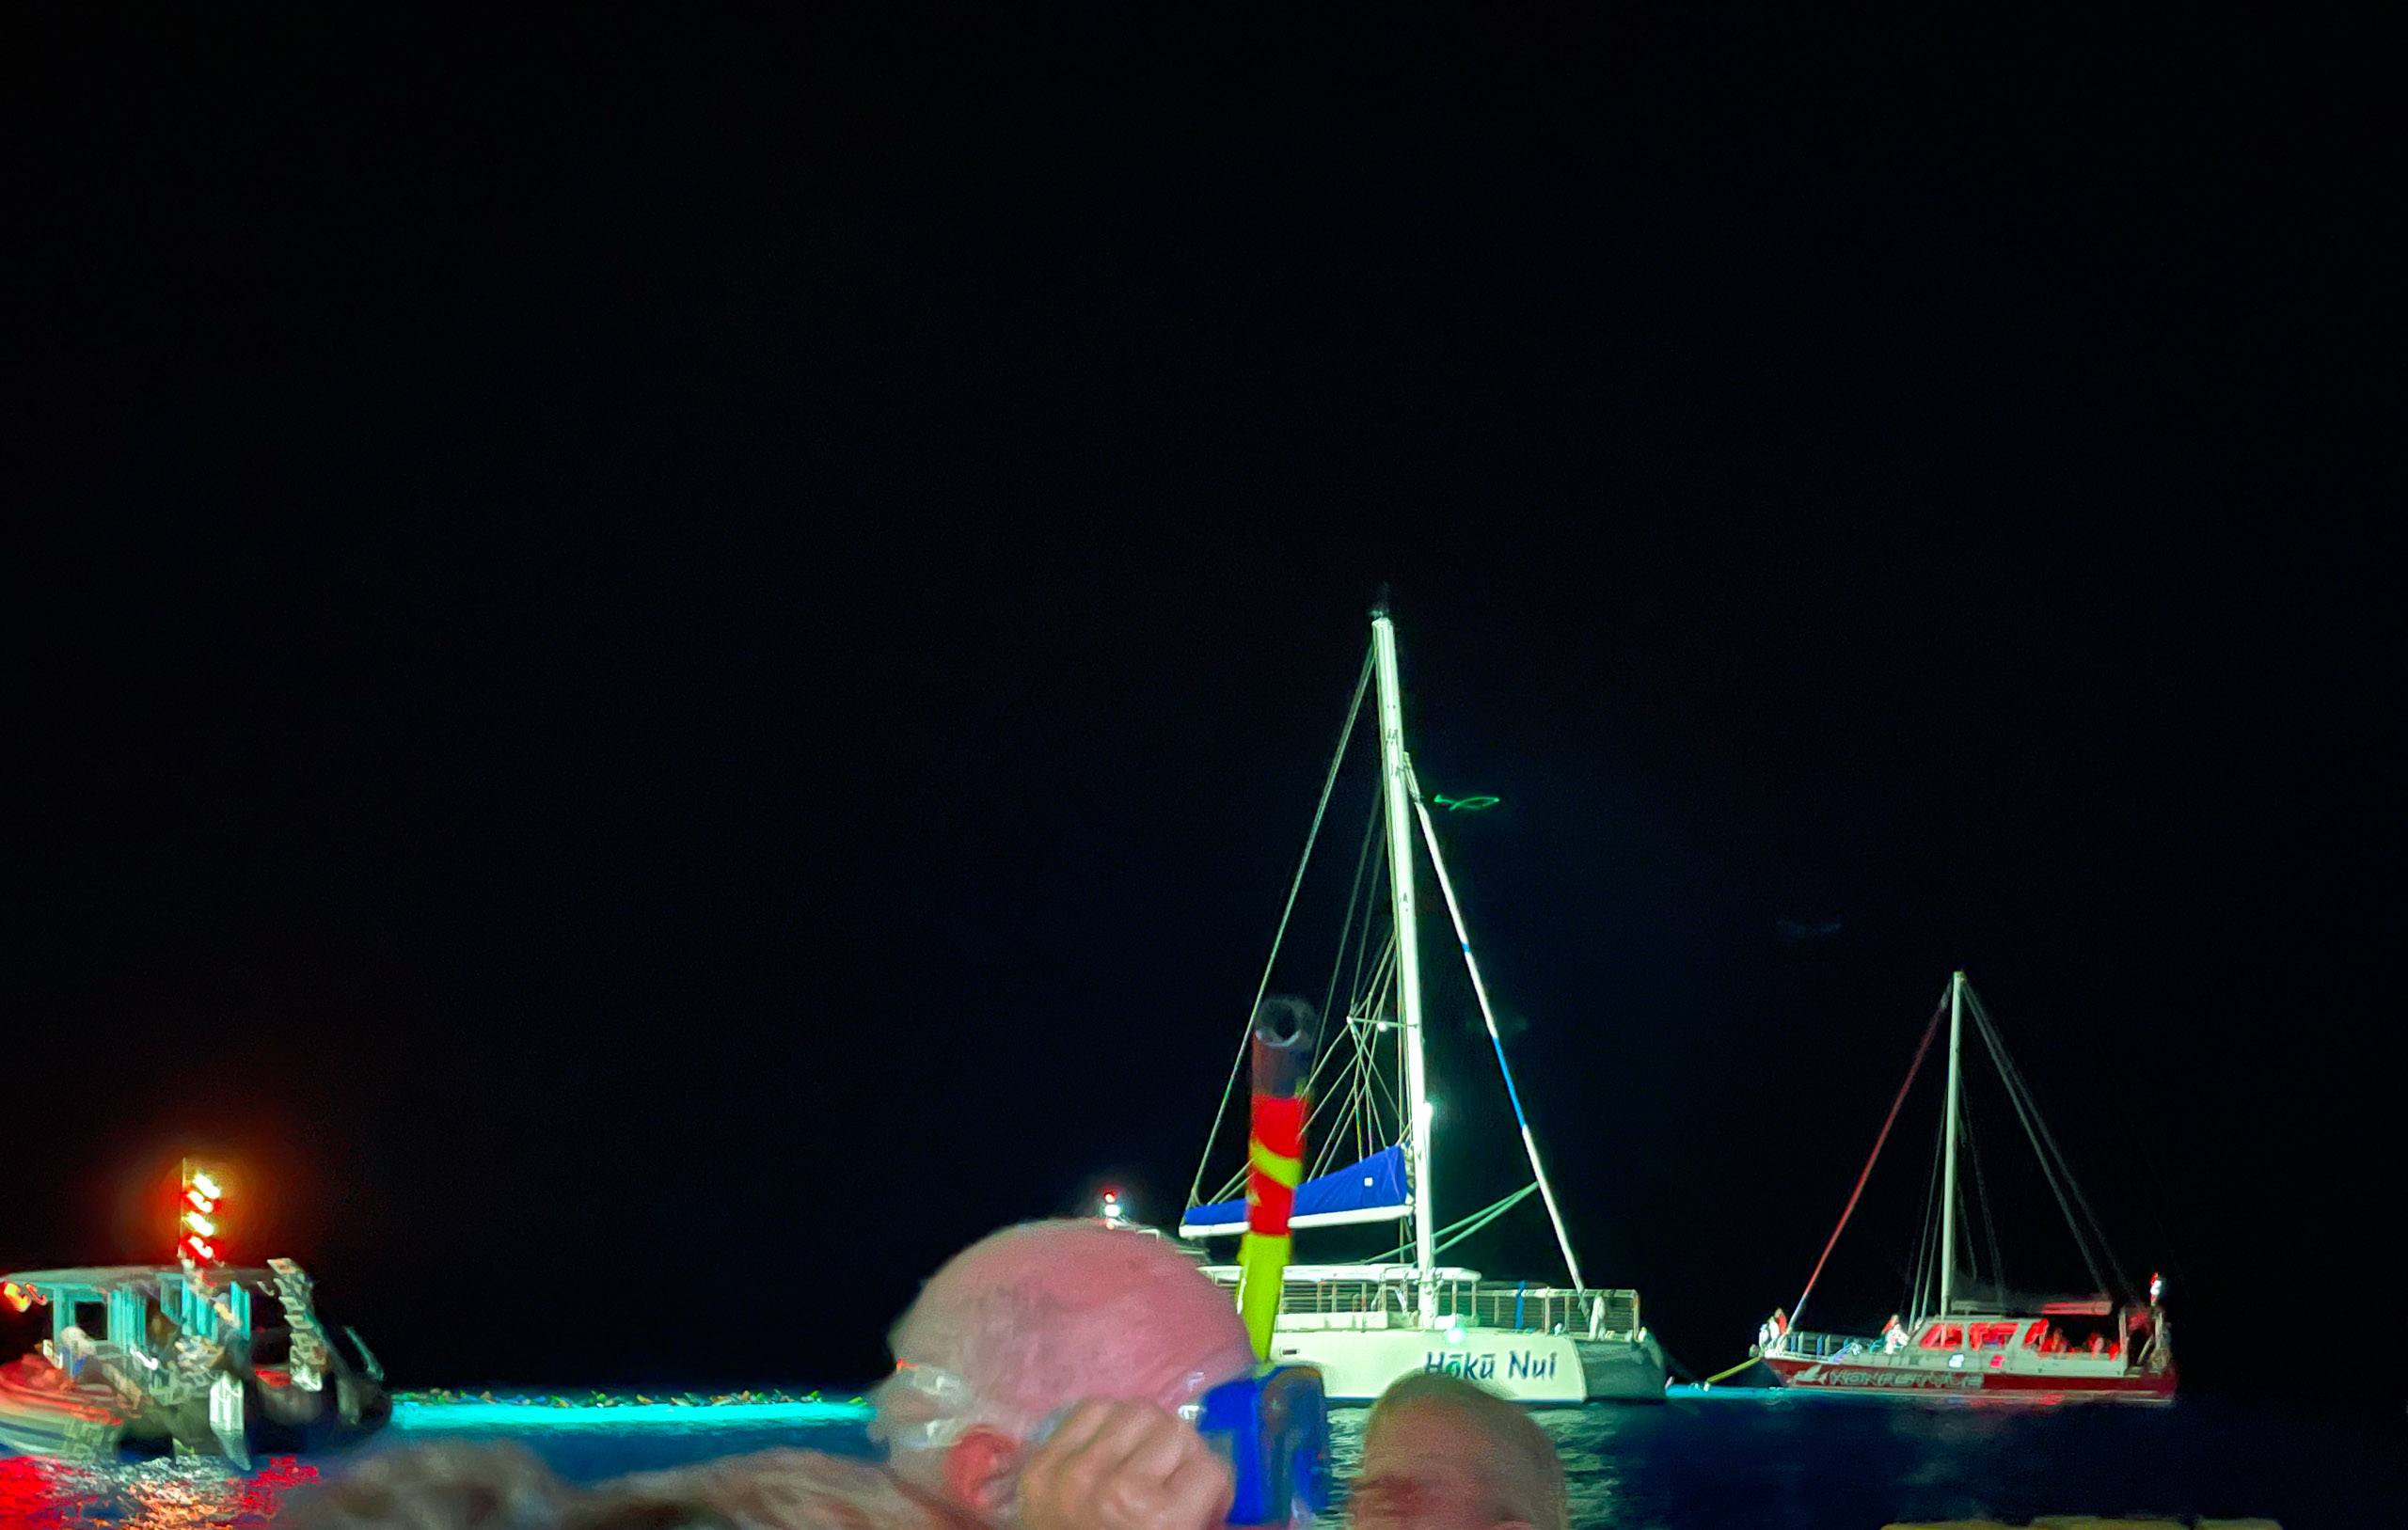 Night-Snorkelers-and-Boats-Keauhou-Bay-Big-Island